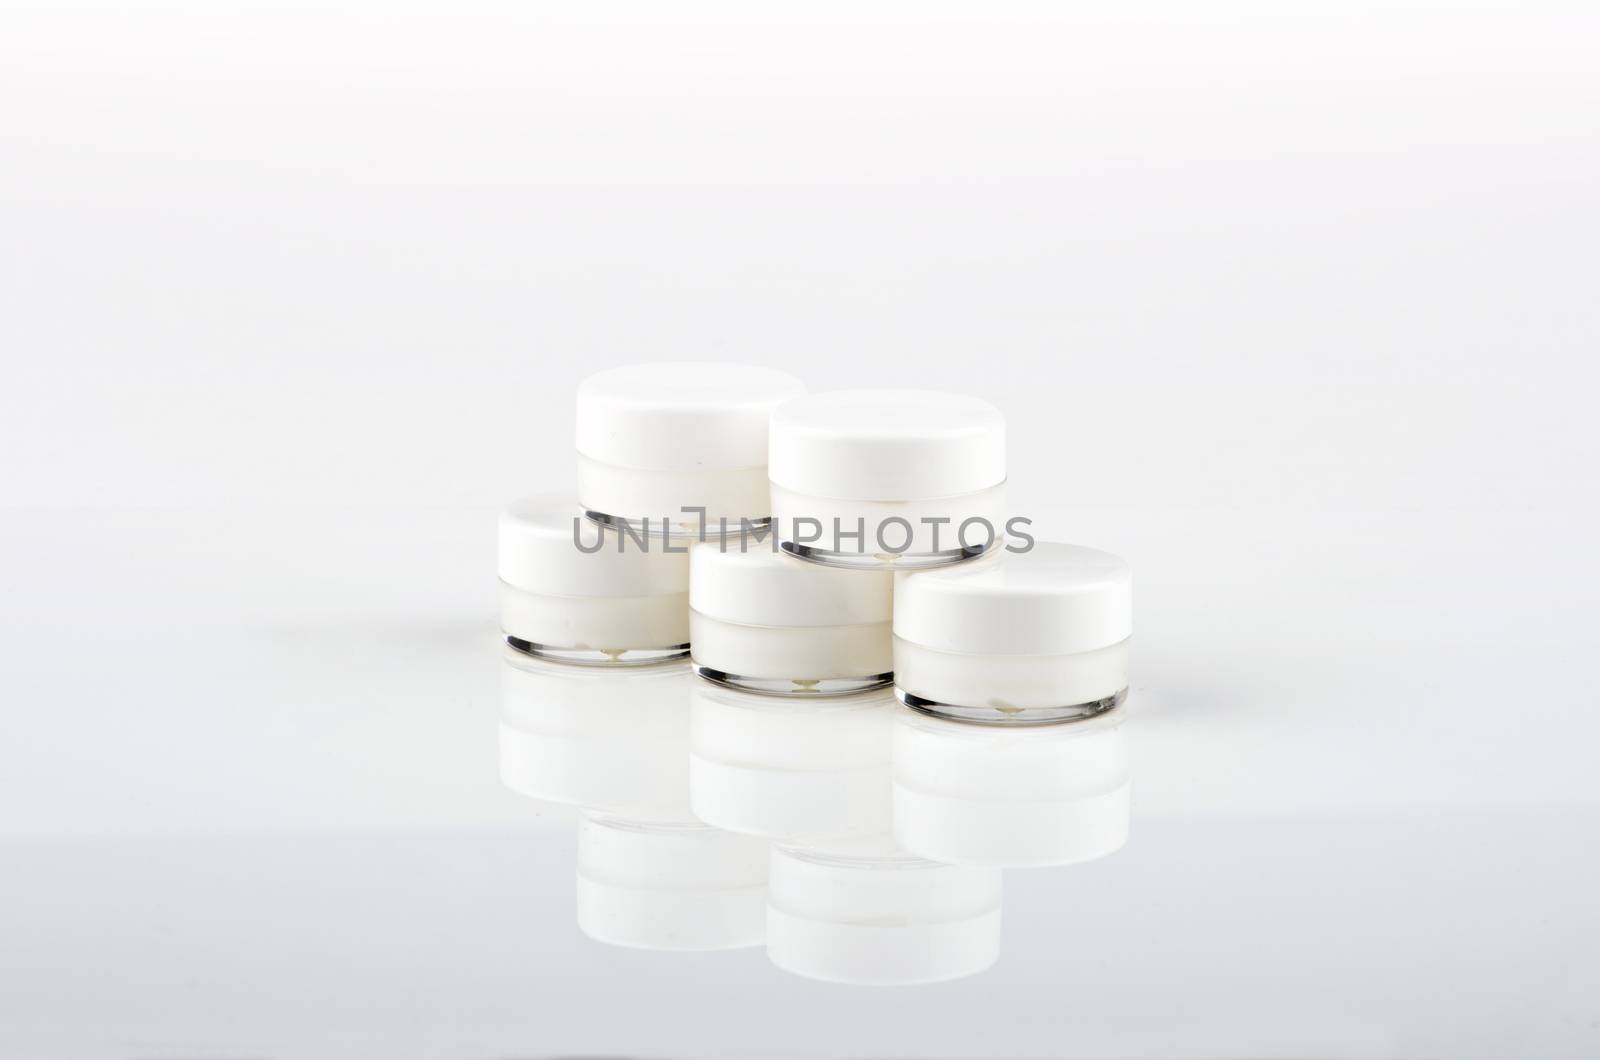 Blank white facial cream jar isolate on white background